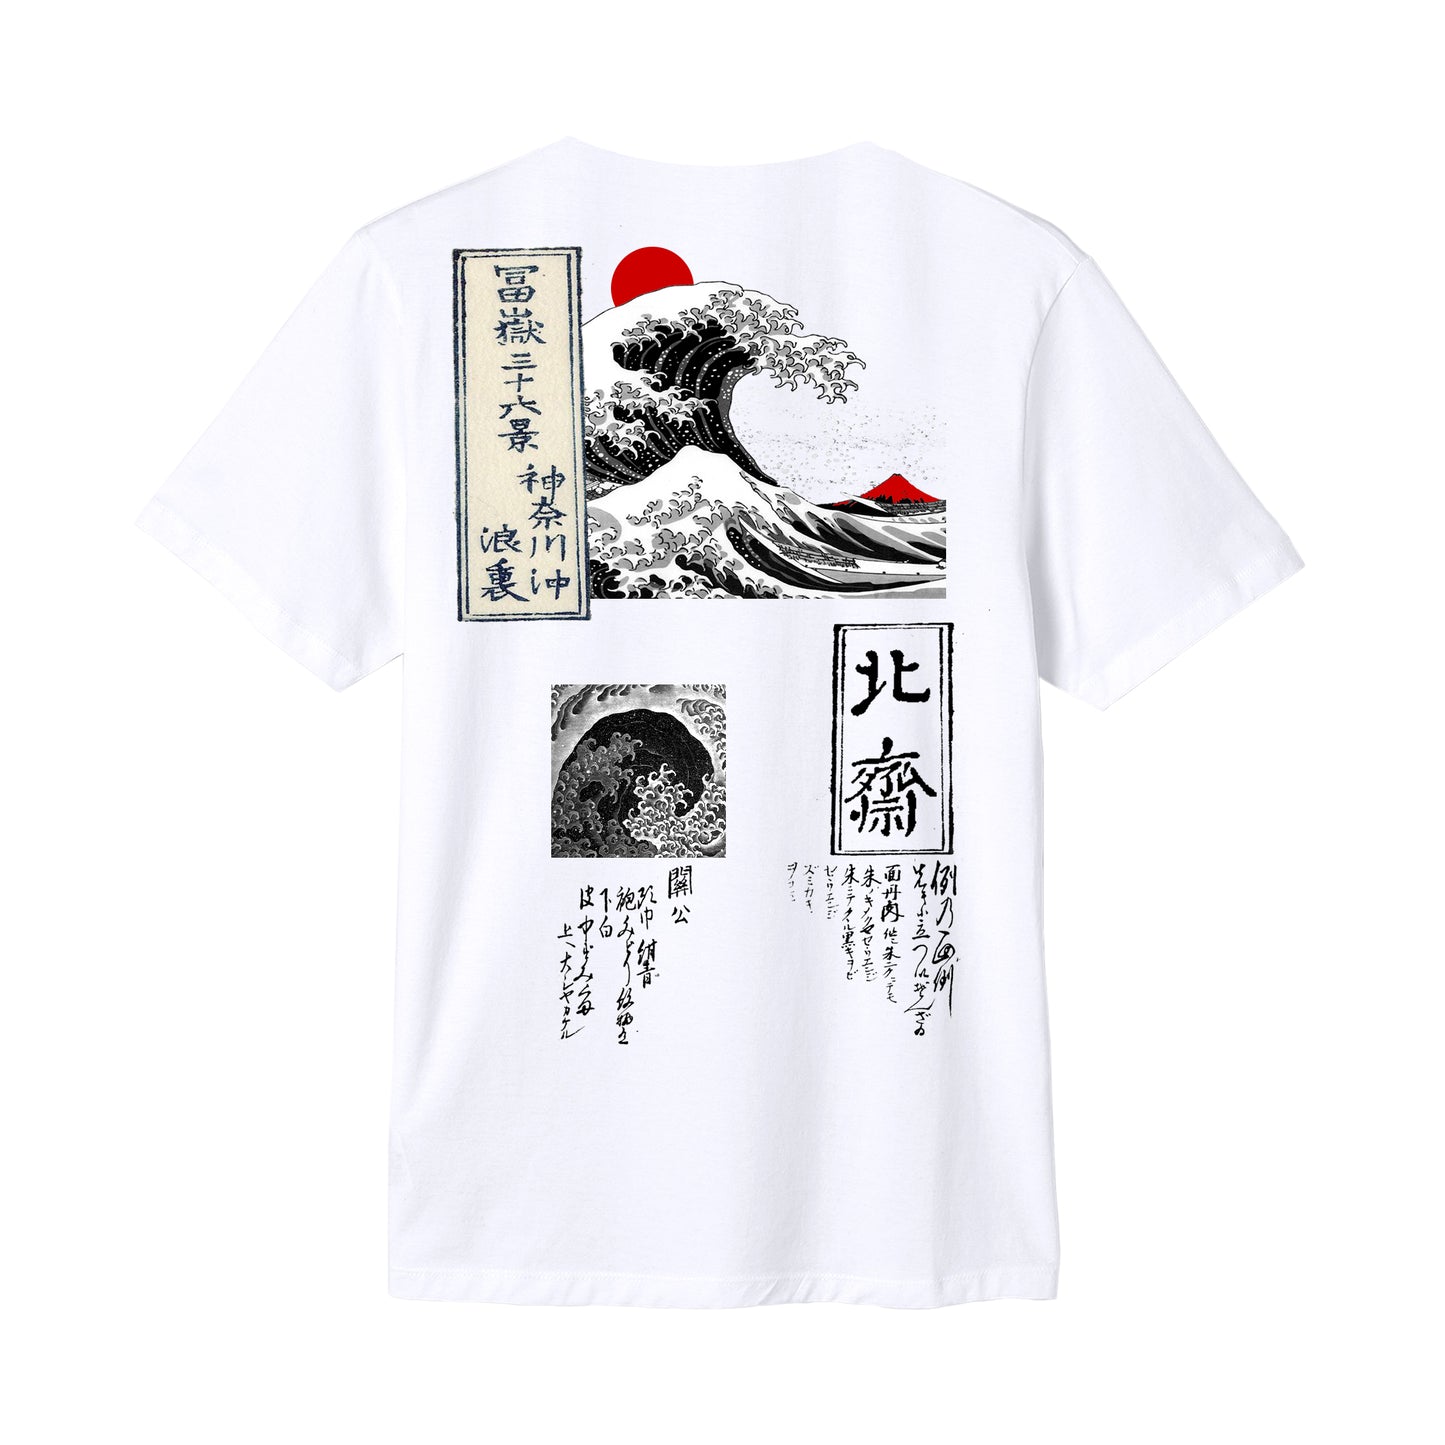 Hokusai The Great Wave T-shirt